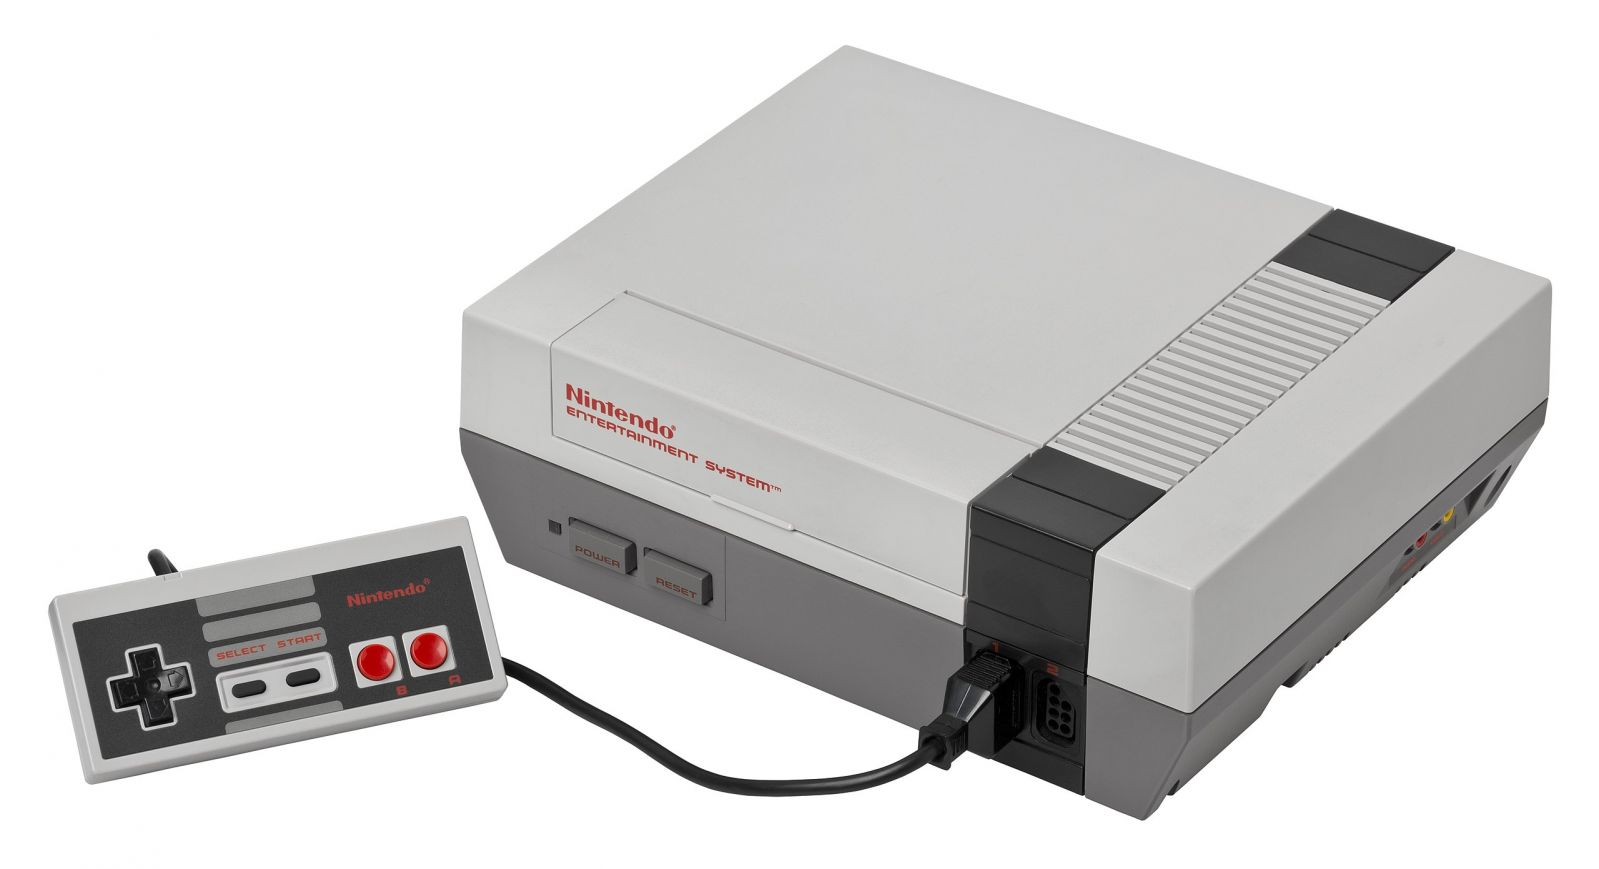 2560px-NES-Console-Set.jpg